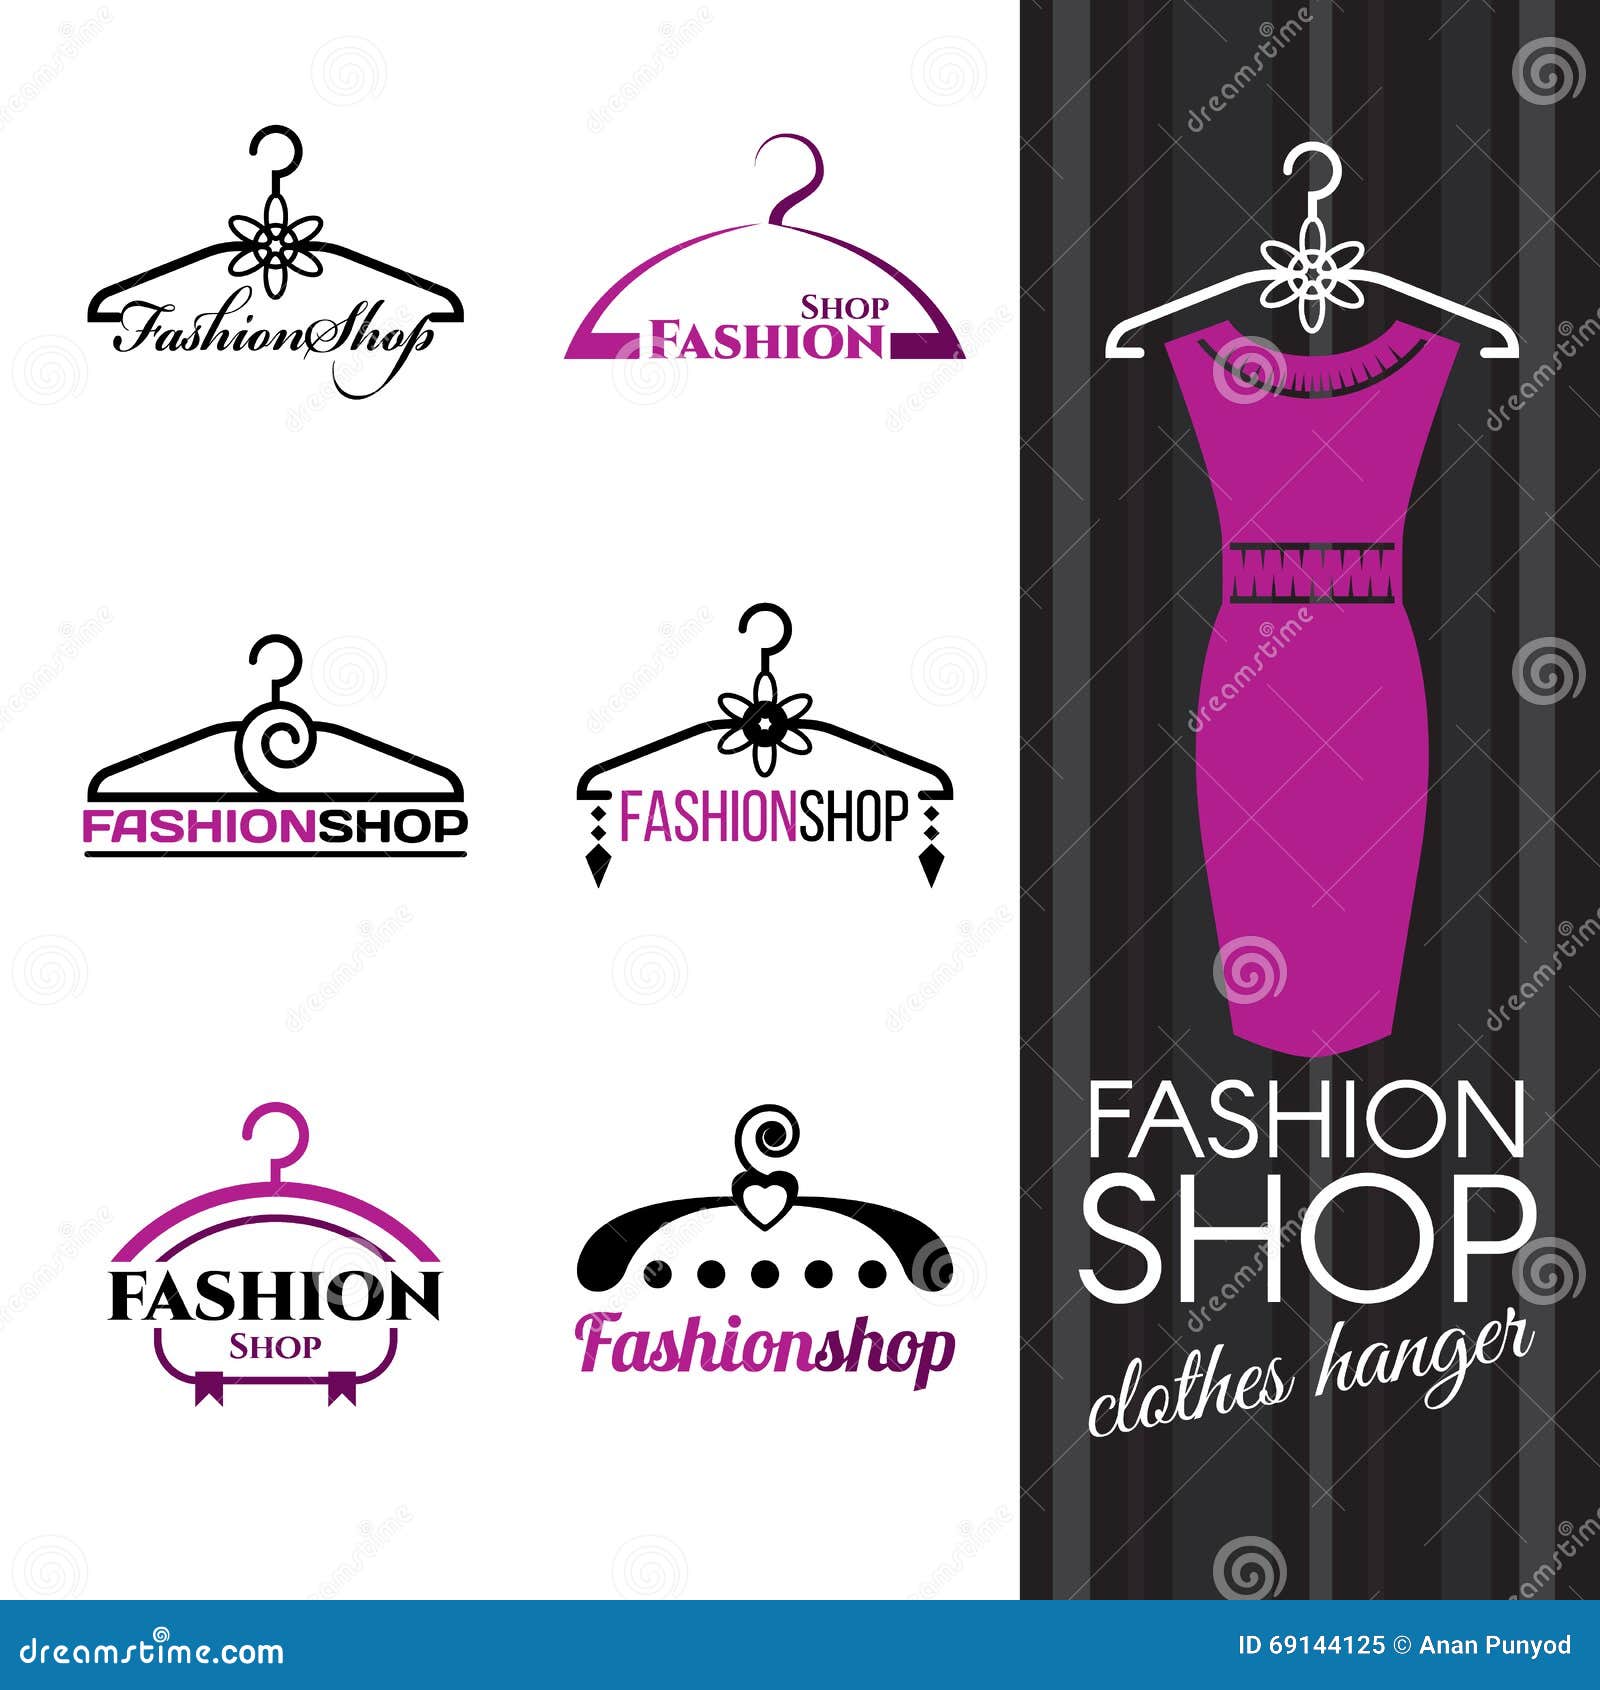 fashion stylist logo design  Personal stylist logo, Graphic design logo,  Business logo inspiration